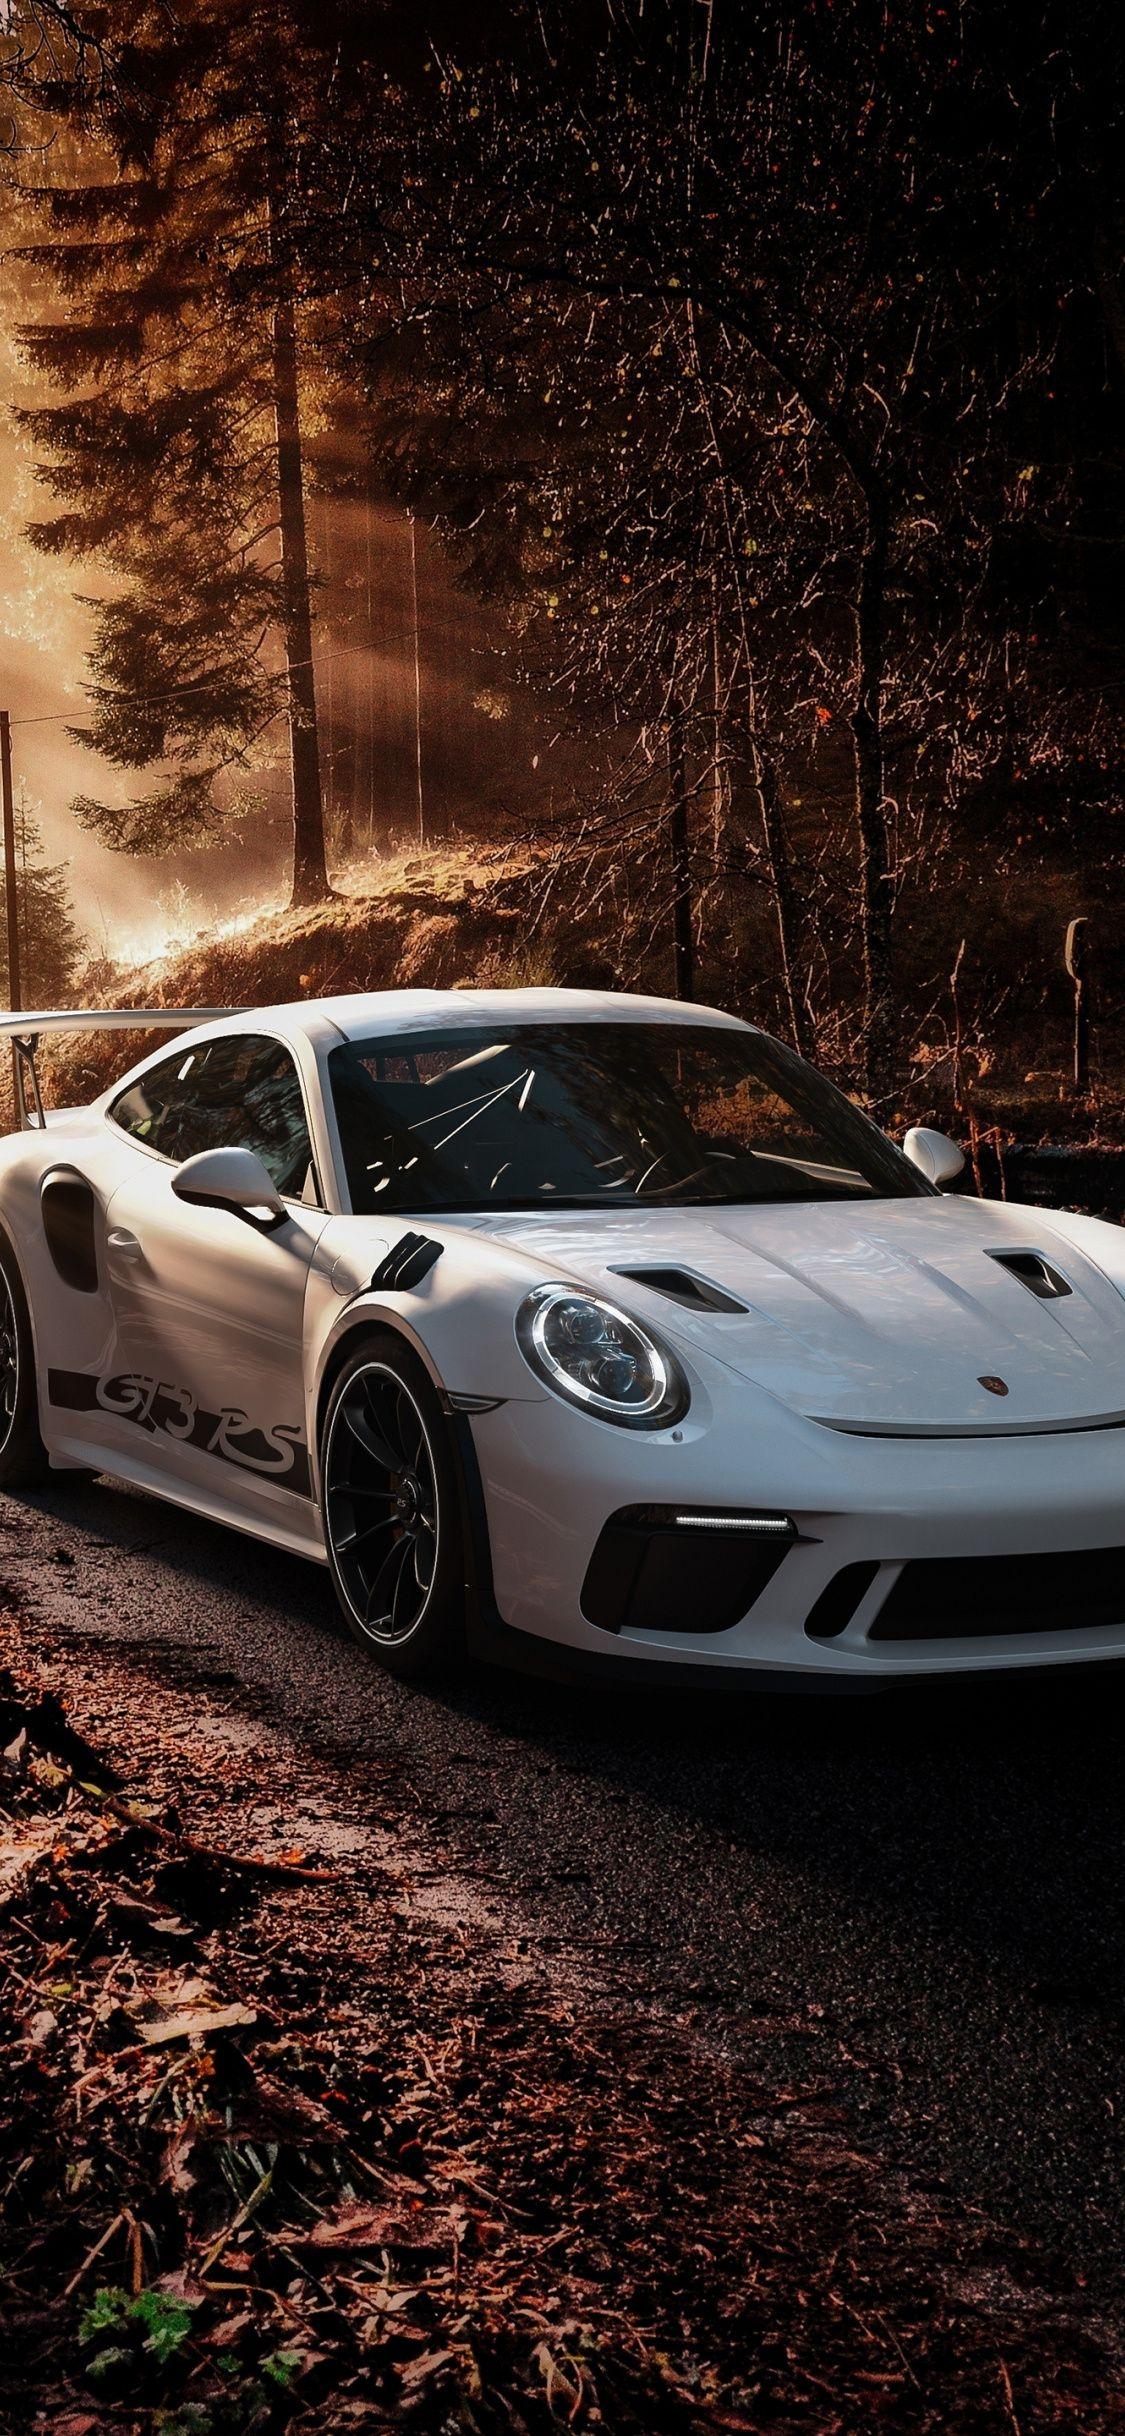 Porsche Iphone Wallpapers Top Free Porsche Iphone Backgrounds Wallpaperaccess